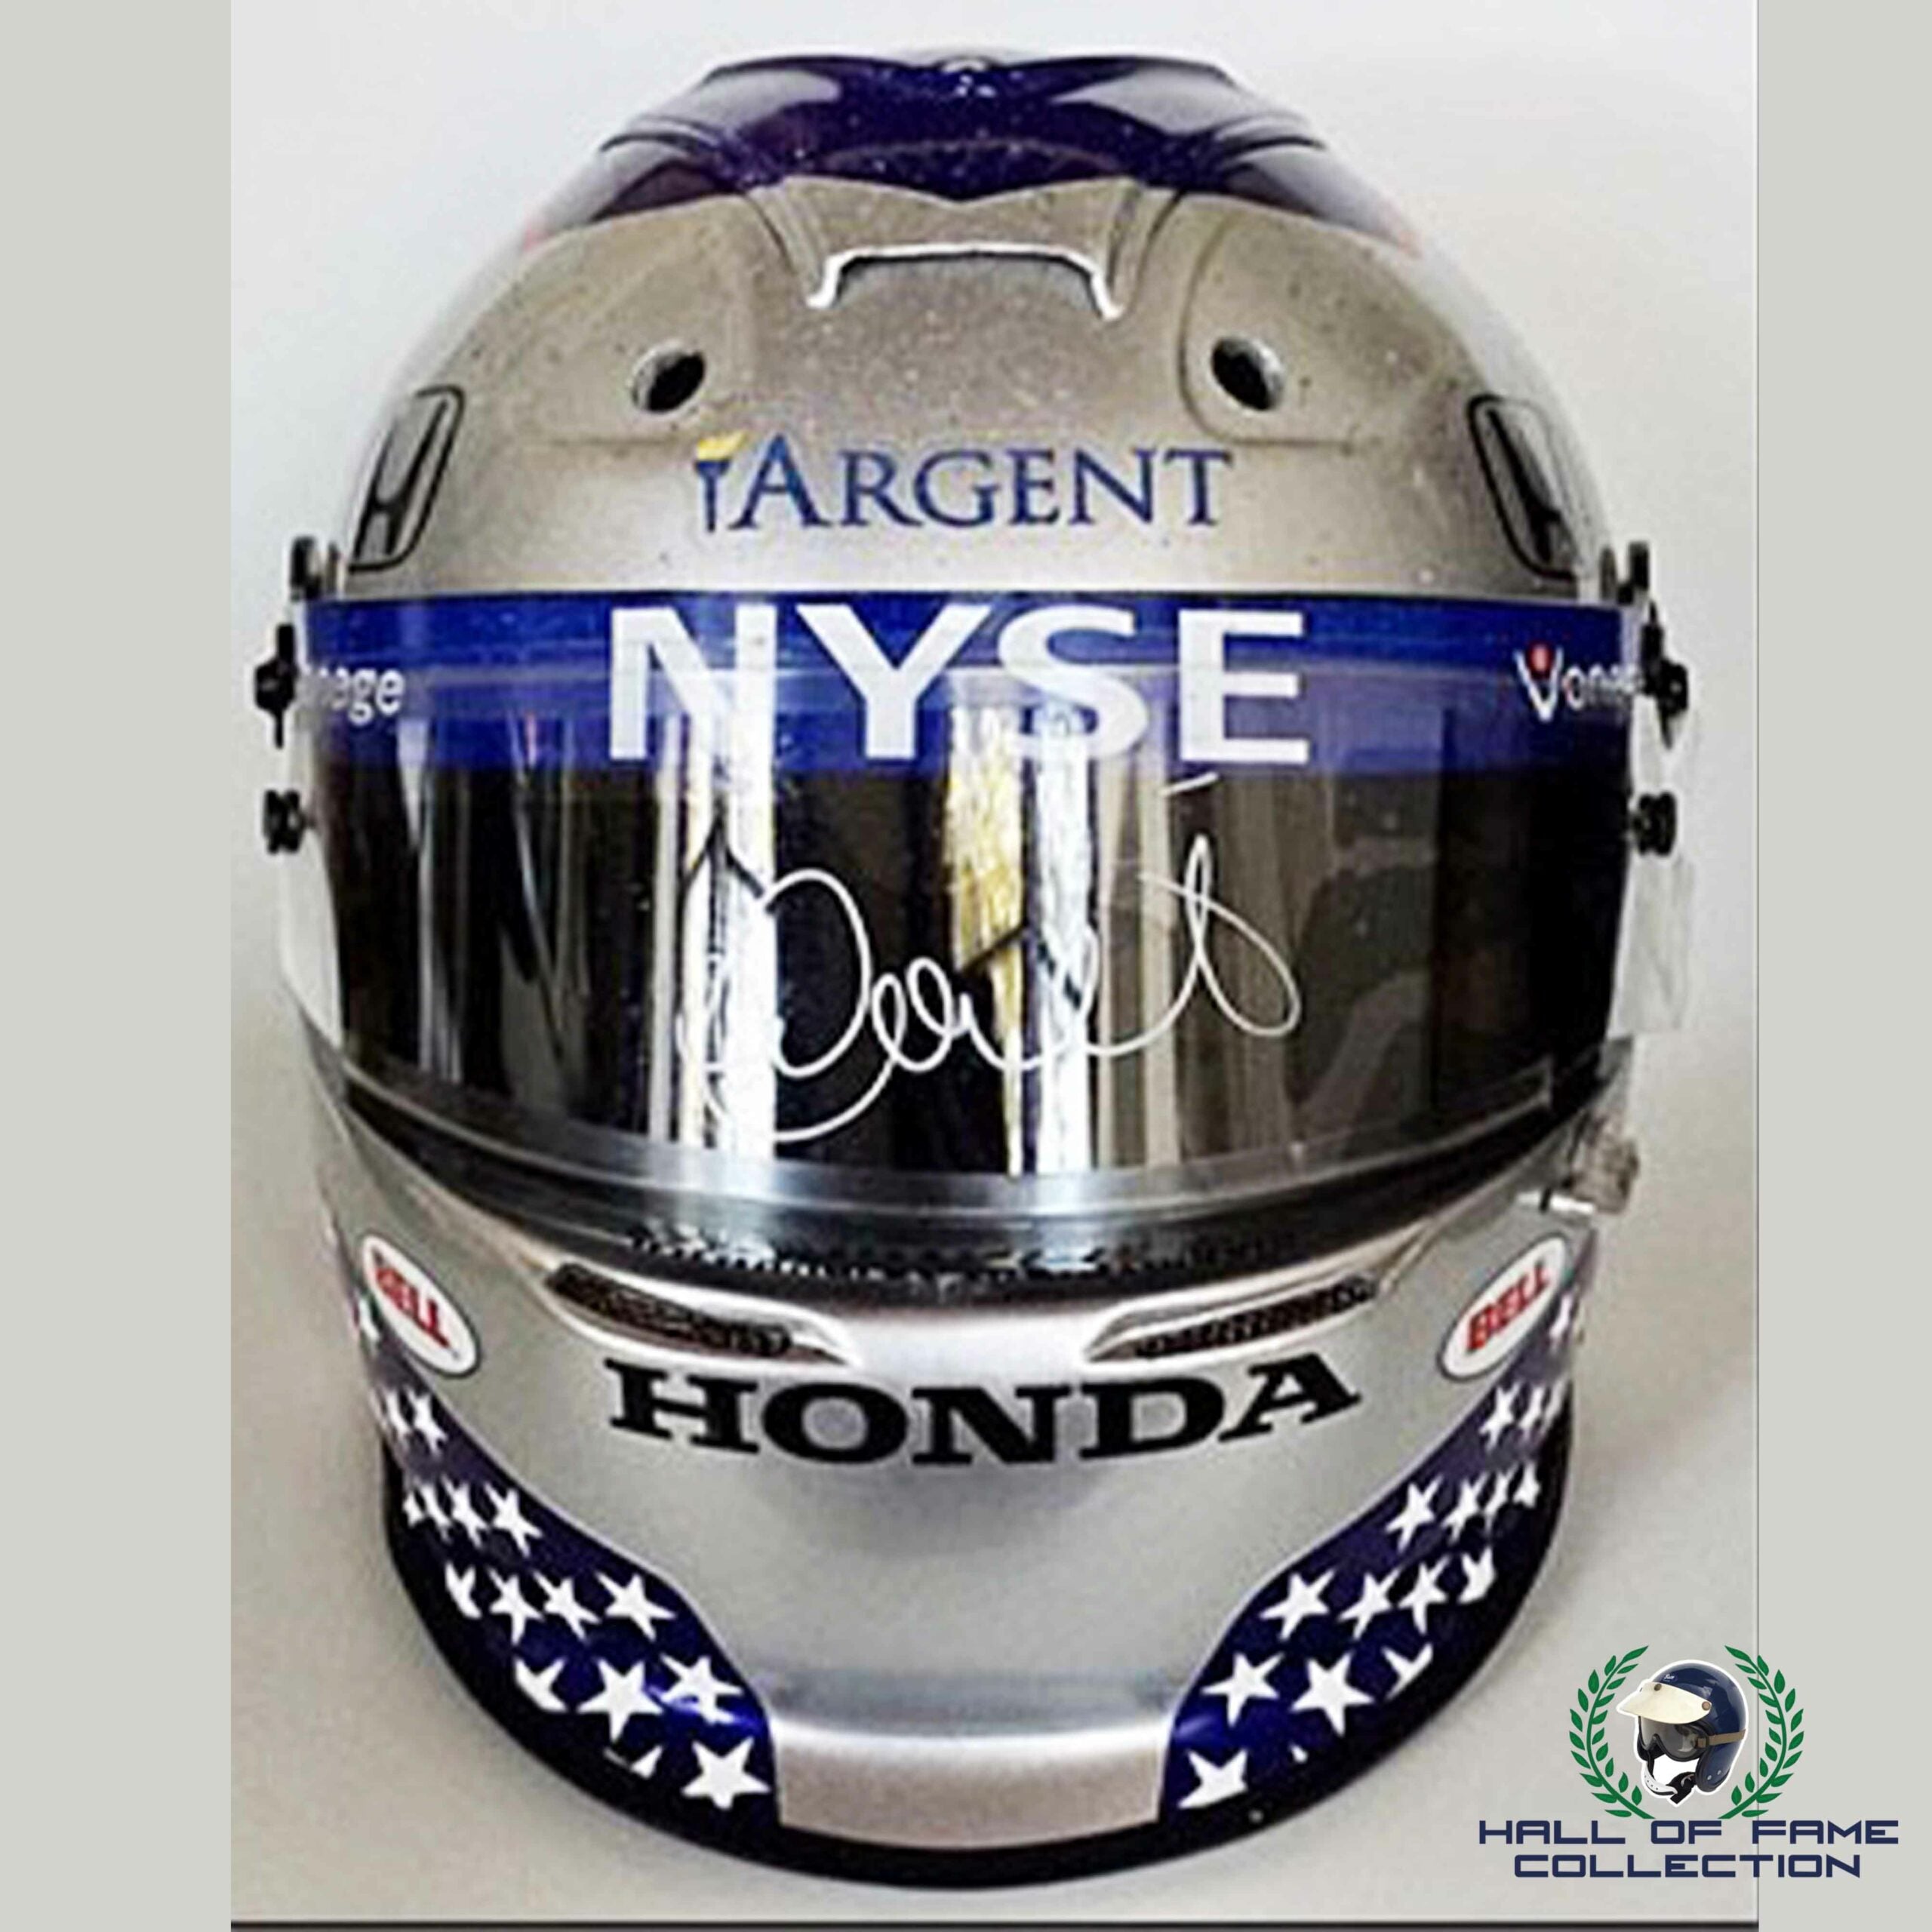 2007 Marco Andretti Race Used Andretti Autosport IndyCar Helmet